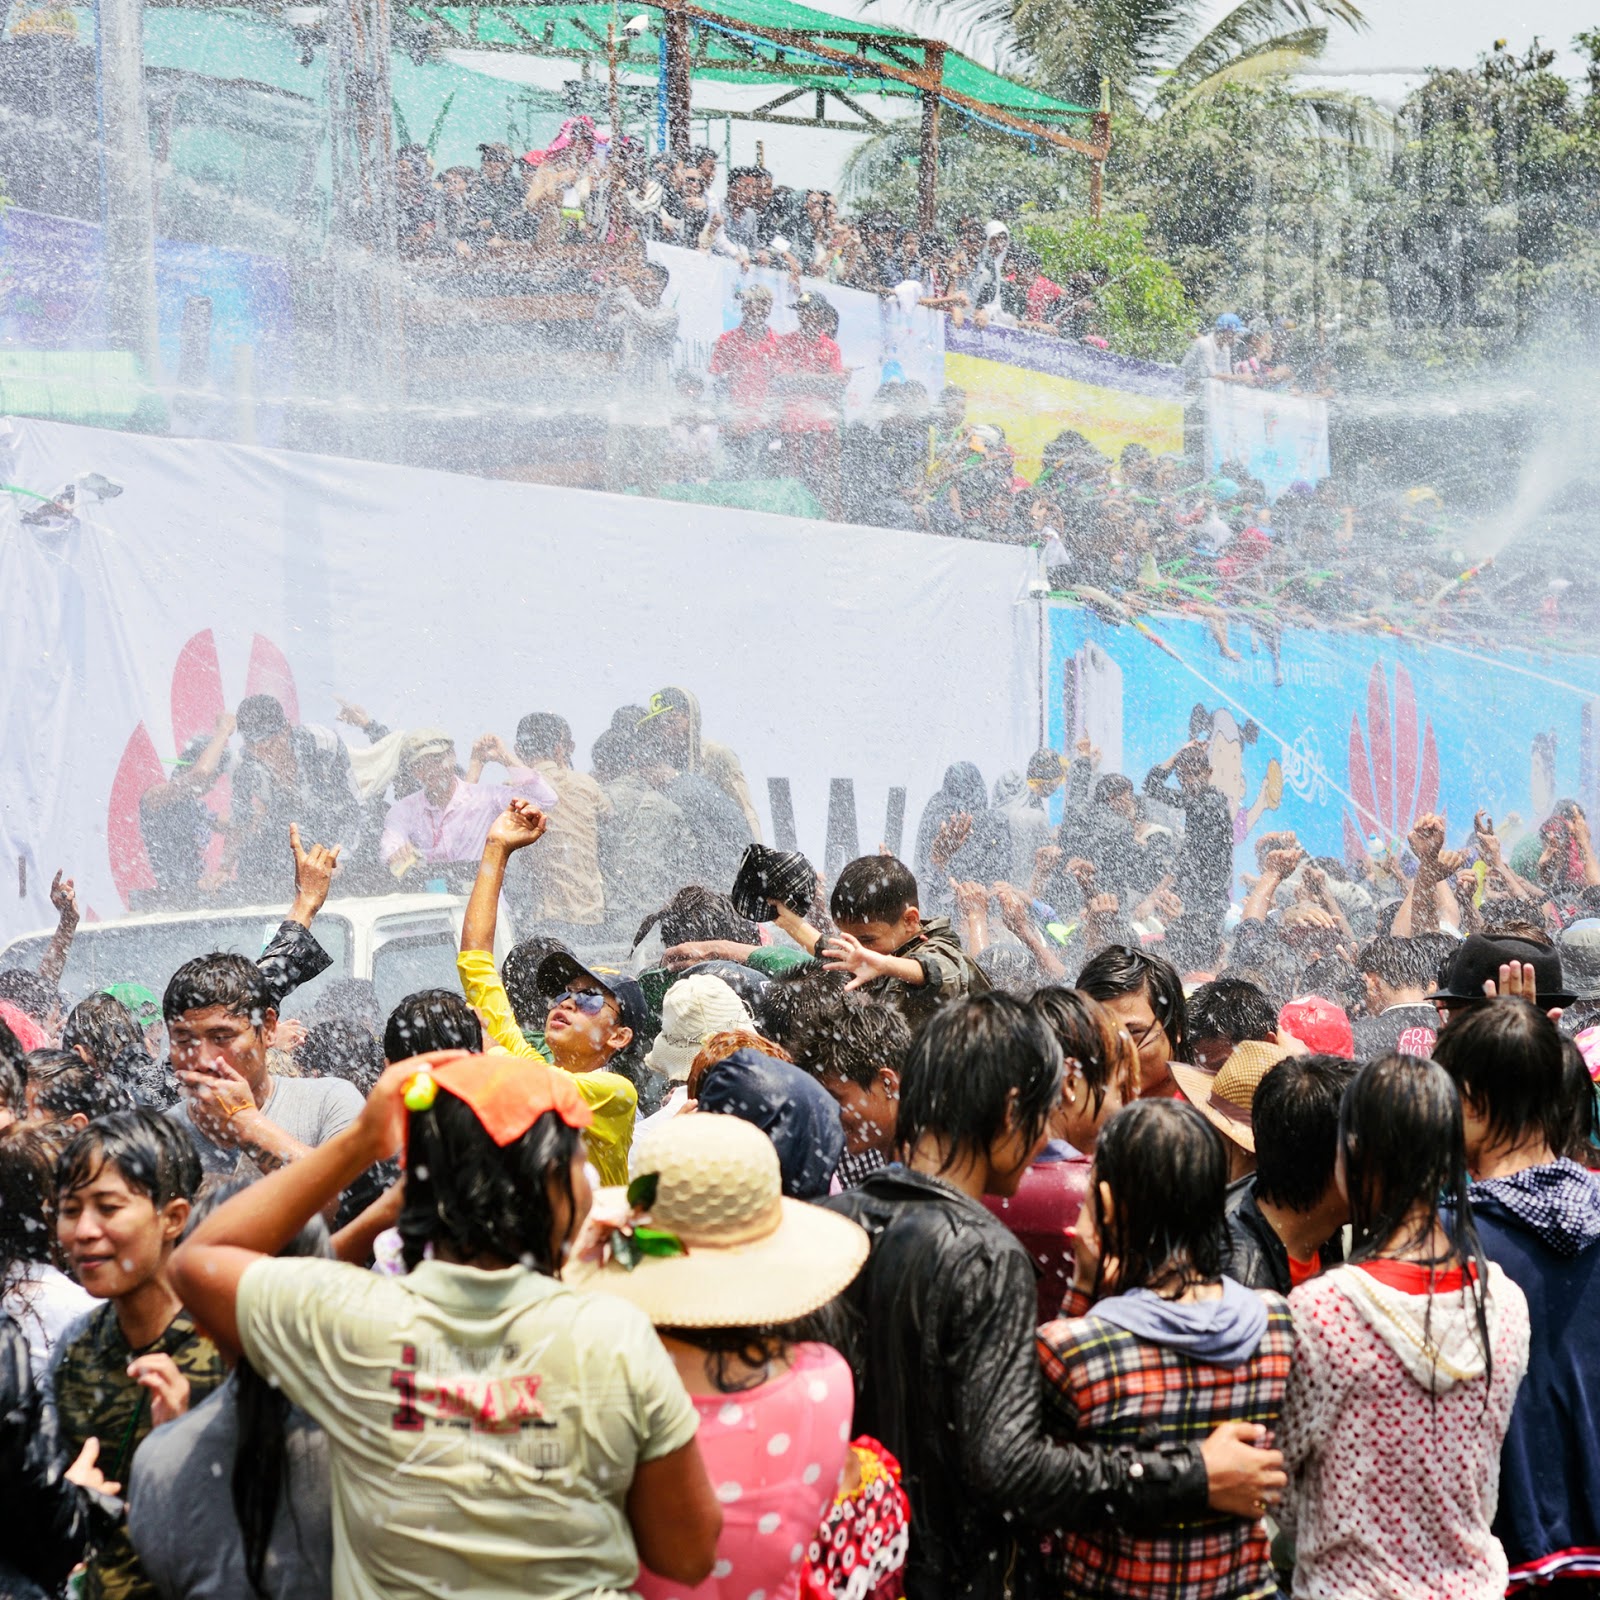 A crowd of people getting wet near Inya Lake, Yangon, during Myanmar's water festival.